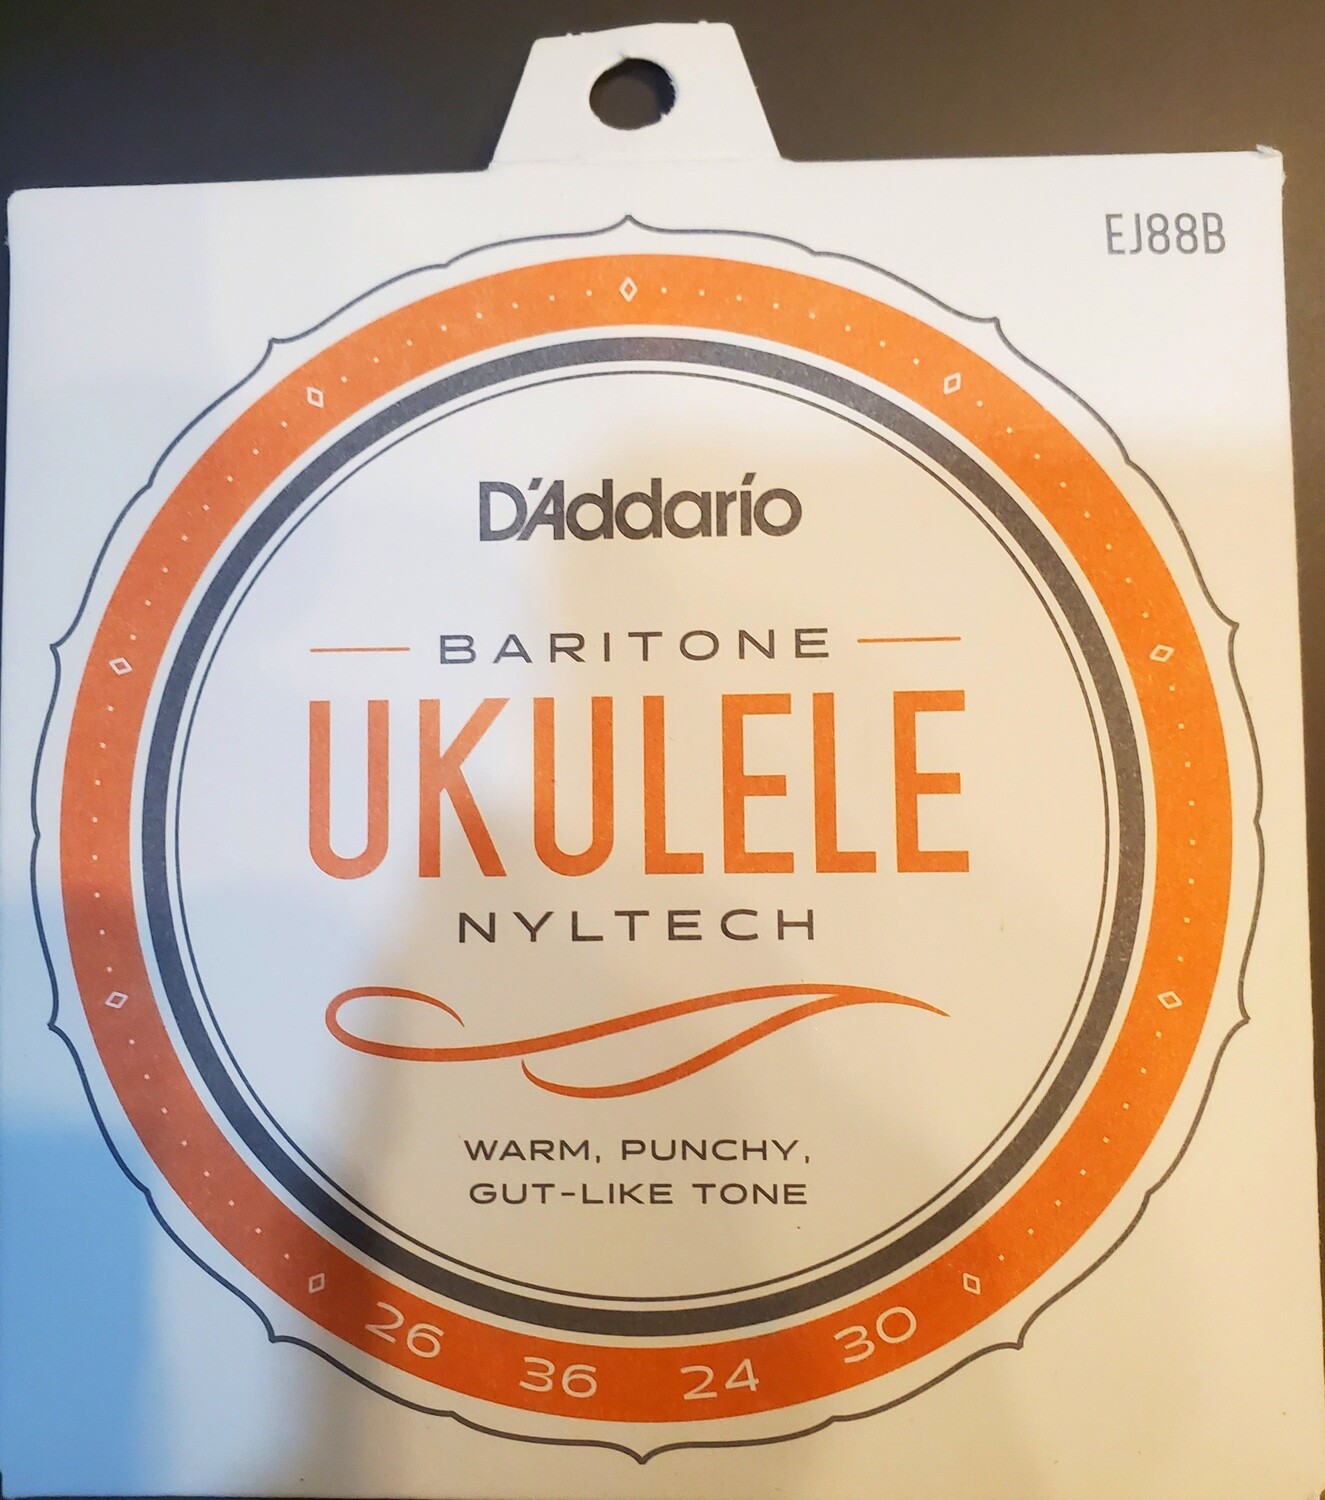 D'Addario Baritone Ukulele Nyltech Strings EJ88B